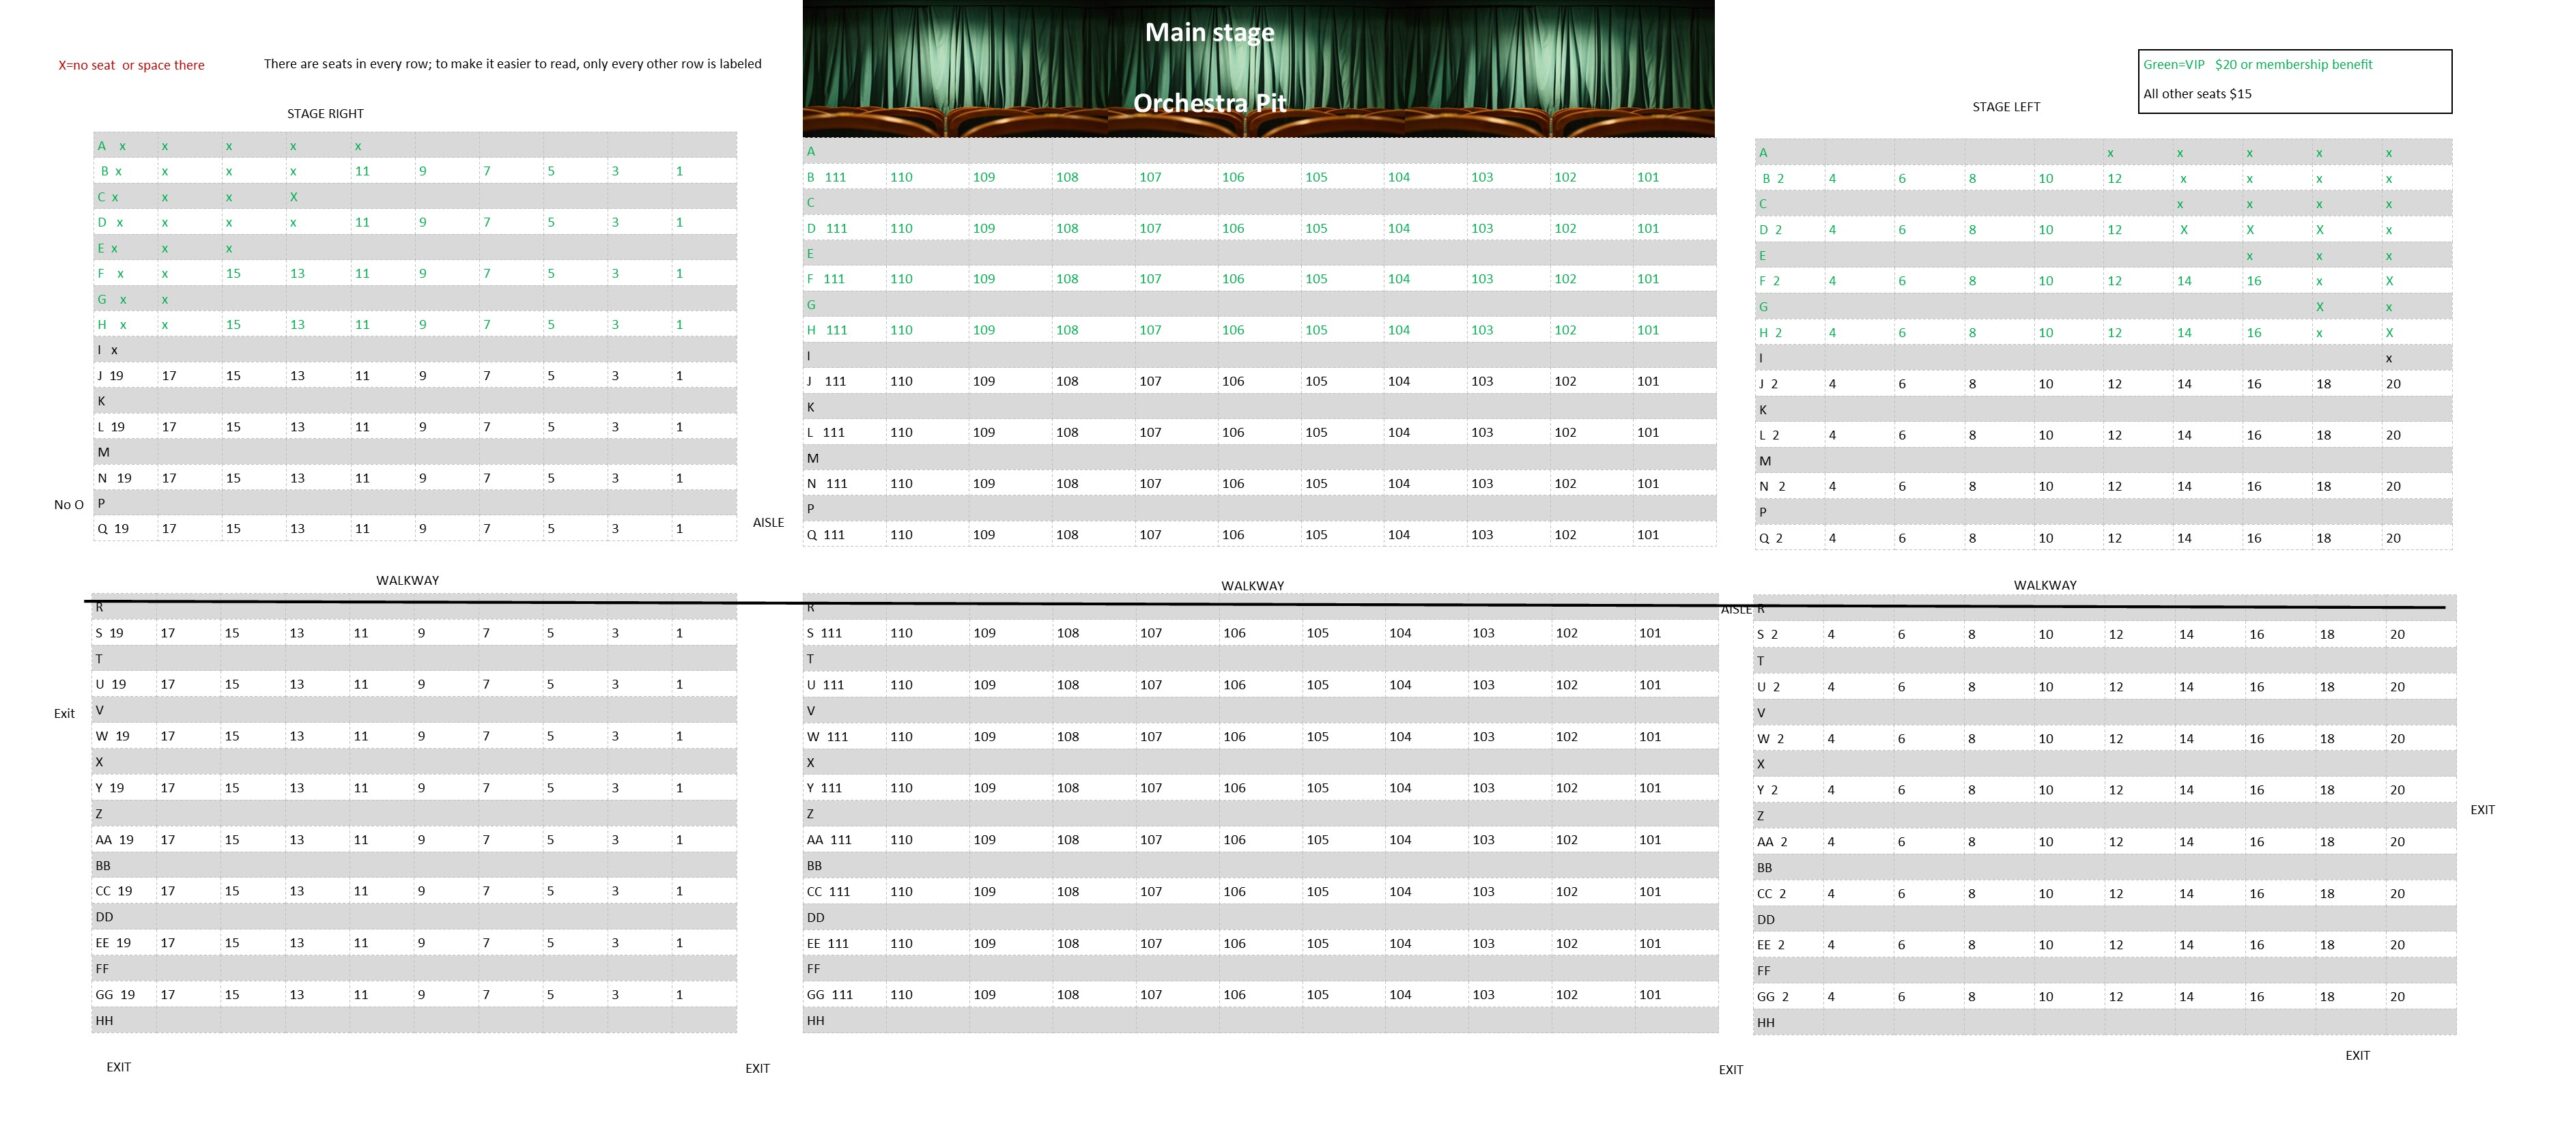 Seating chart FMHS Auditorium 4 28 2022